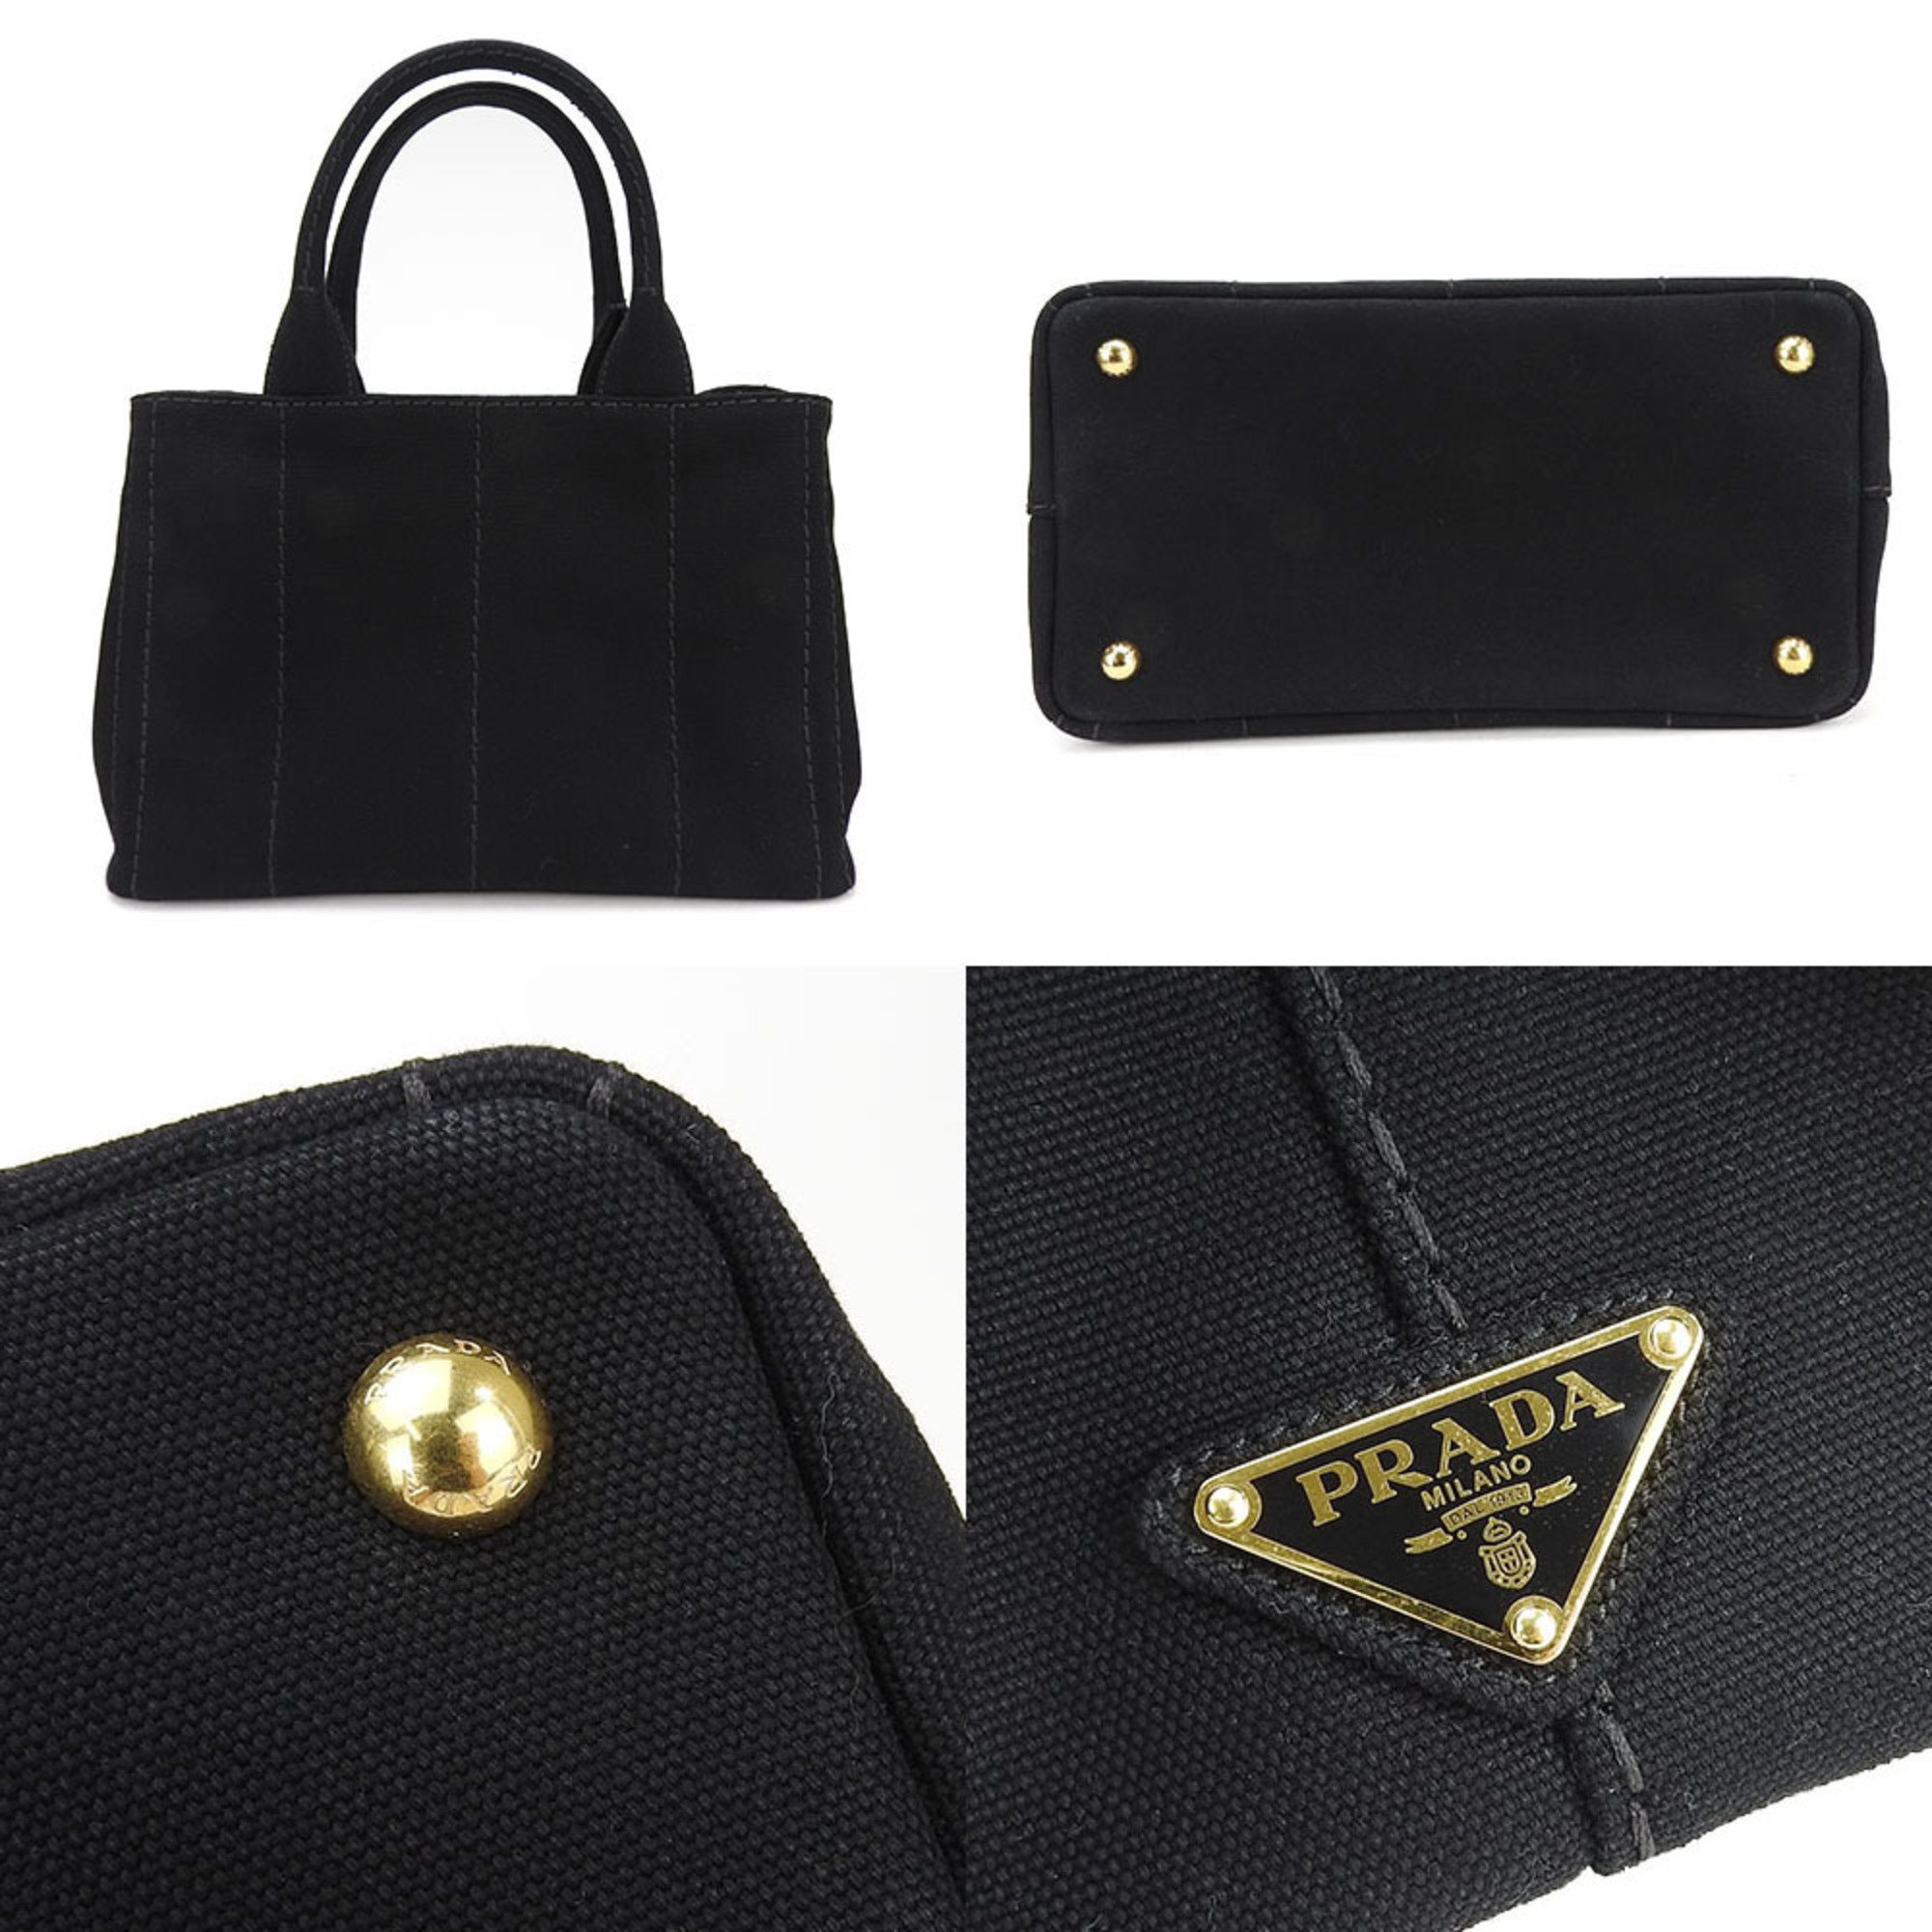 Prada handbag shoulder Canapa 1BG439 canvas black ladies PRADA hand bag